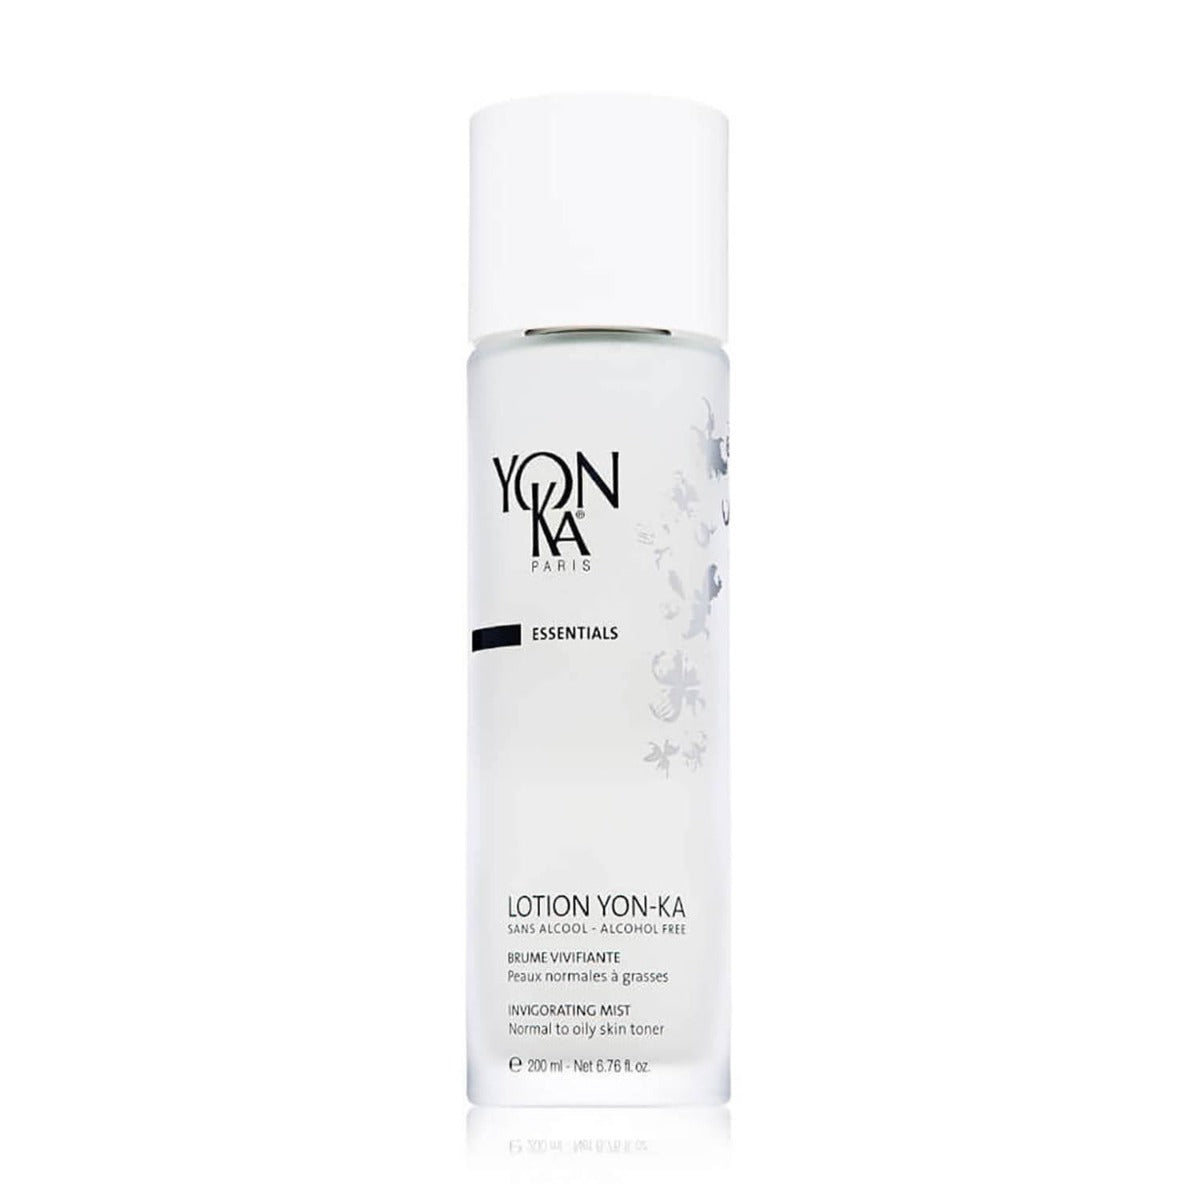 Yonka Paris Lotion PNG (Normal/Oily Skin) 200ml